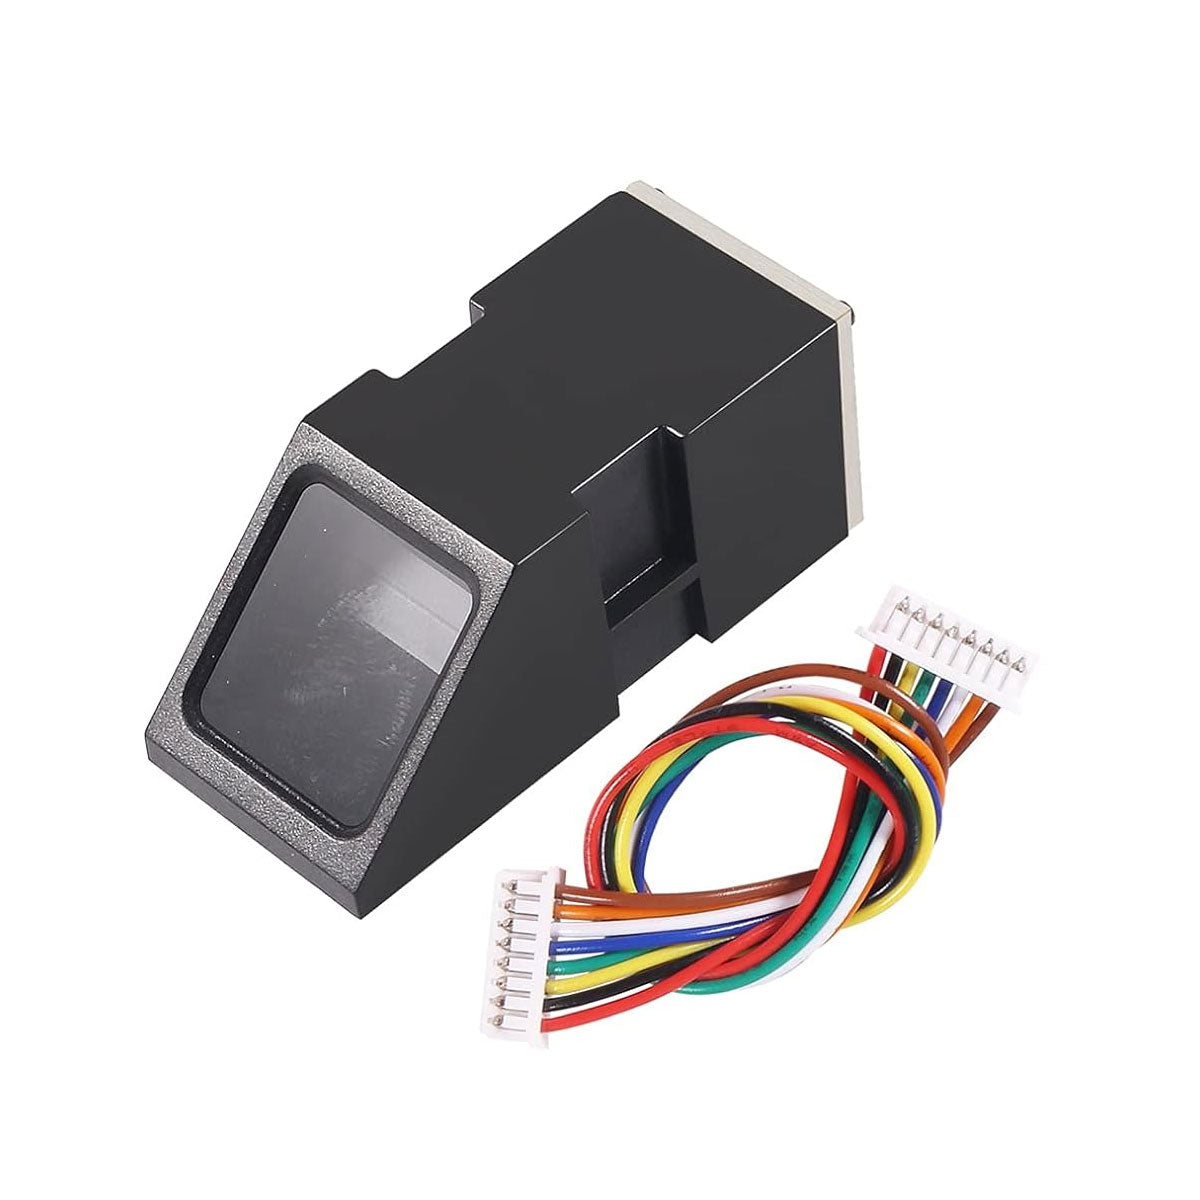 AS608 Fingerprint Reader Sensor Module for Arduino Mega2560 UNO R3